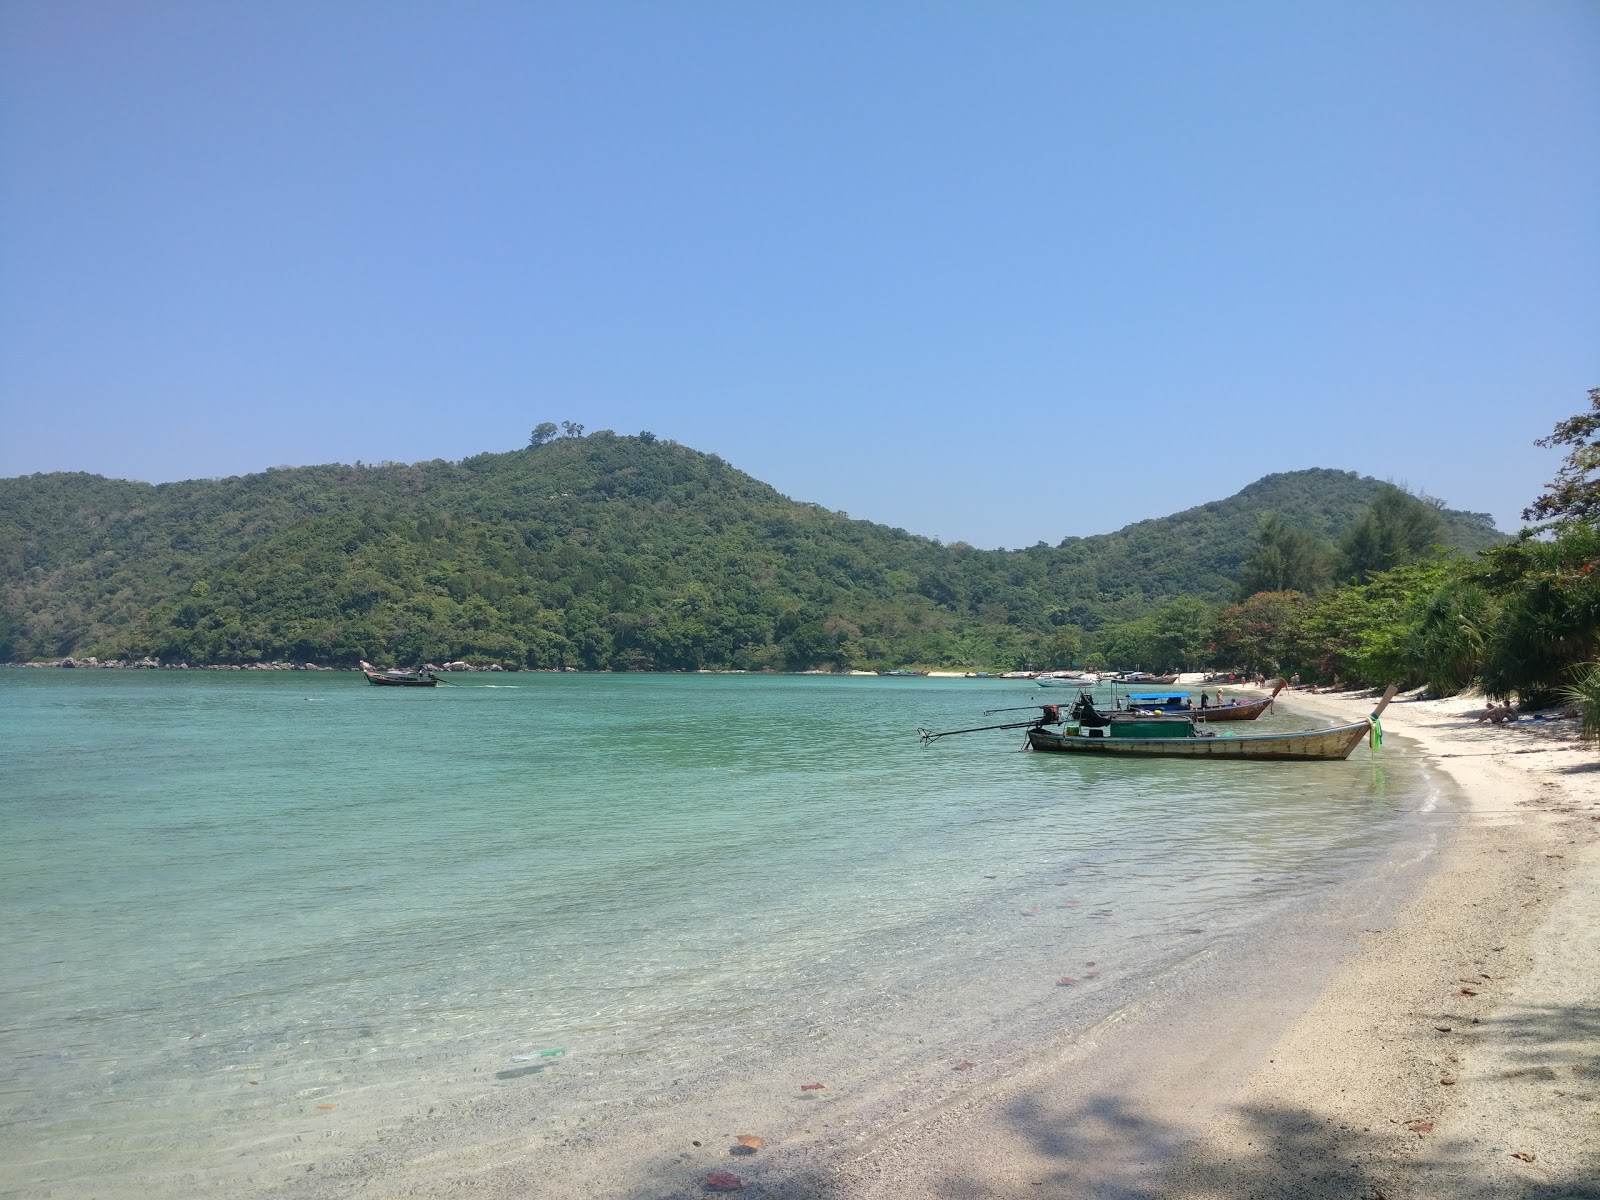 Foto di Loh Lana Bay Beach ubicato in zona naturale